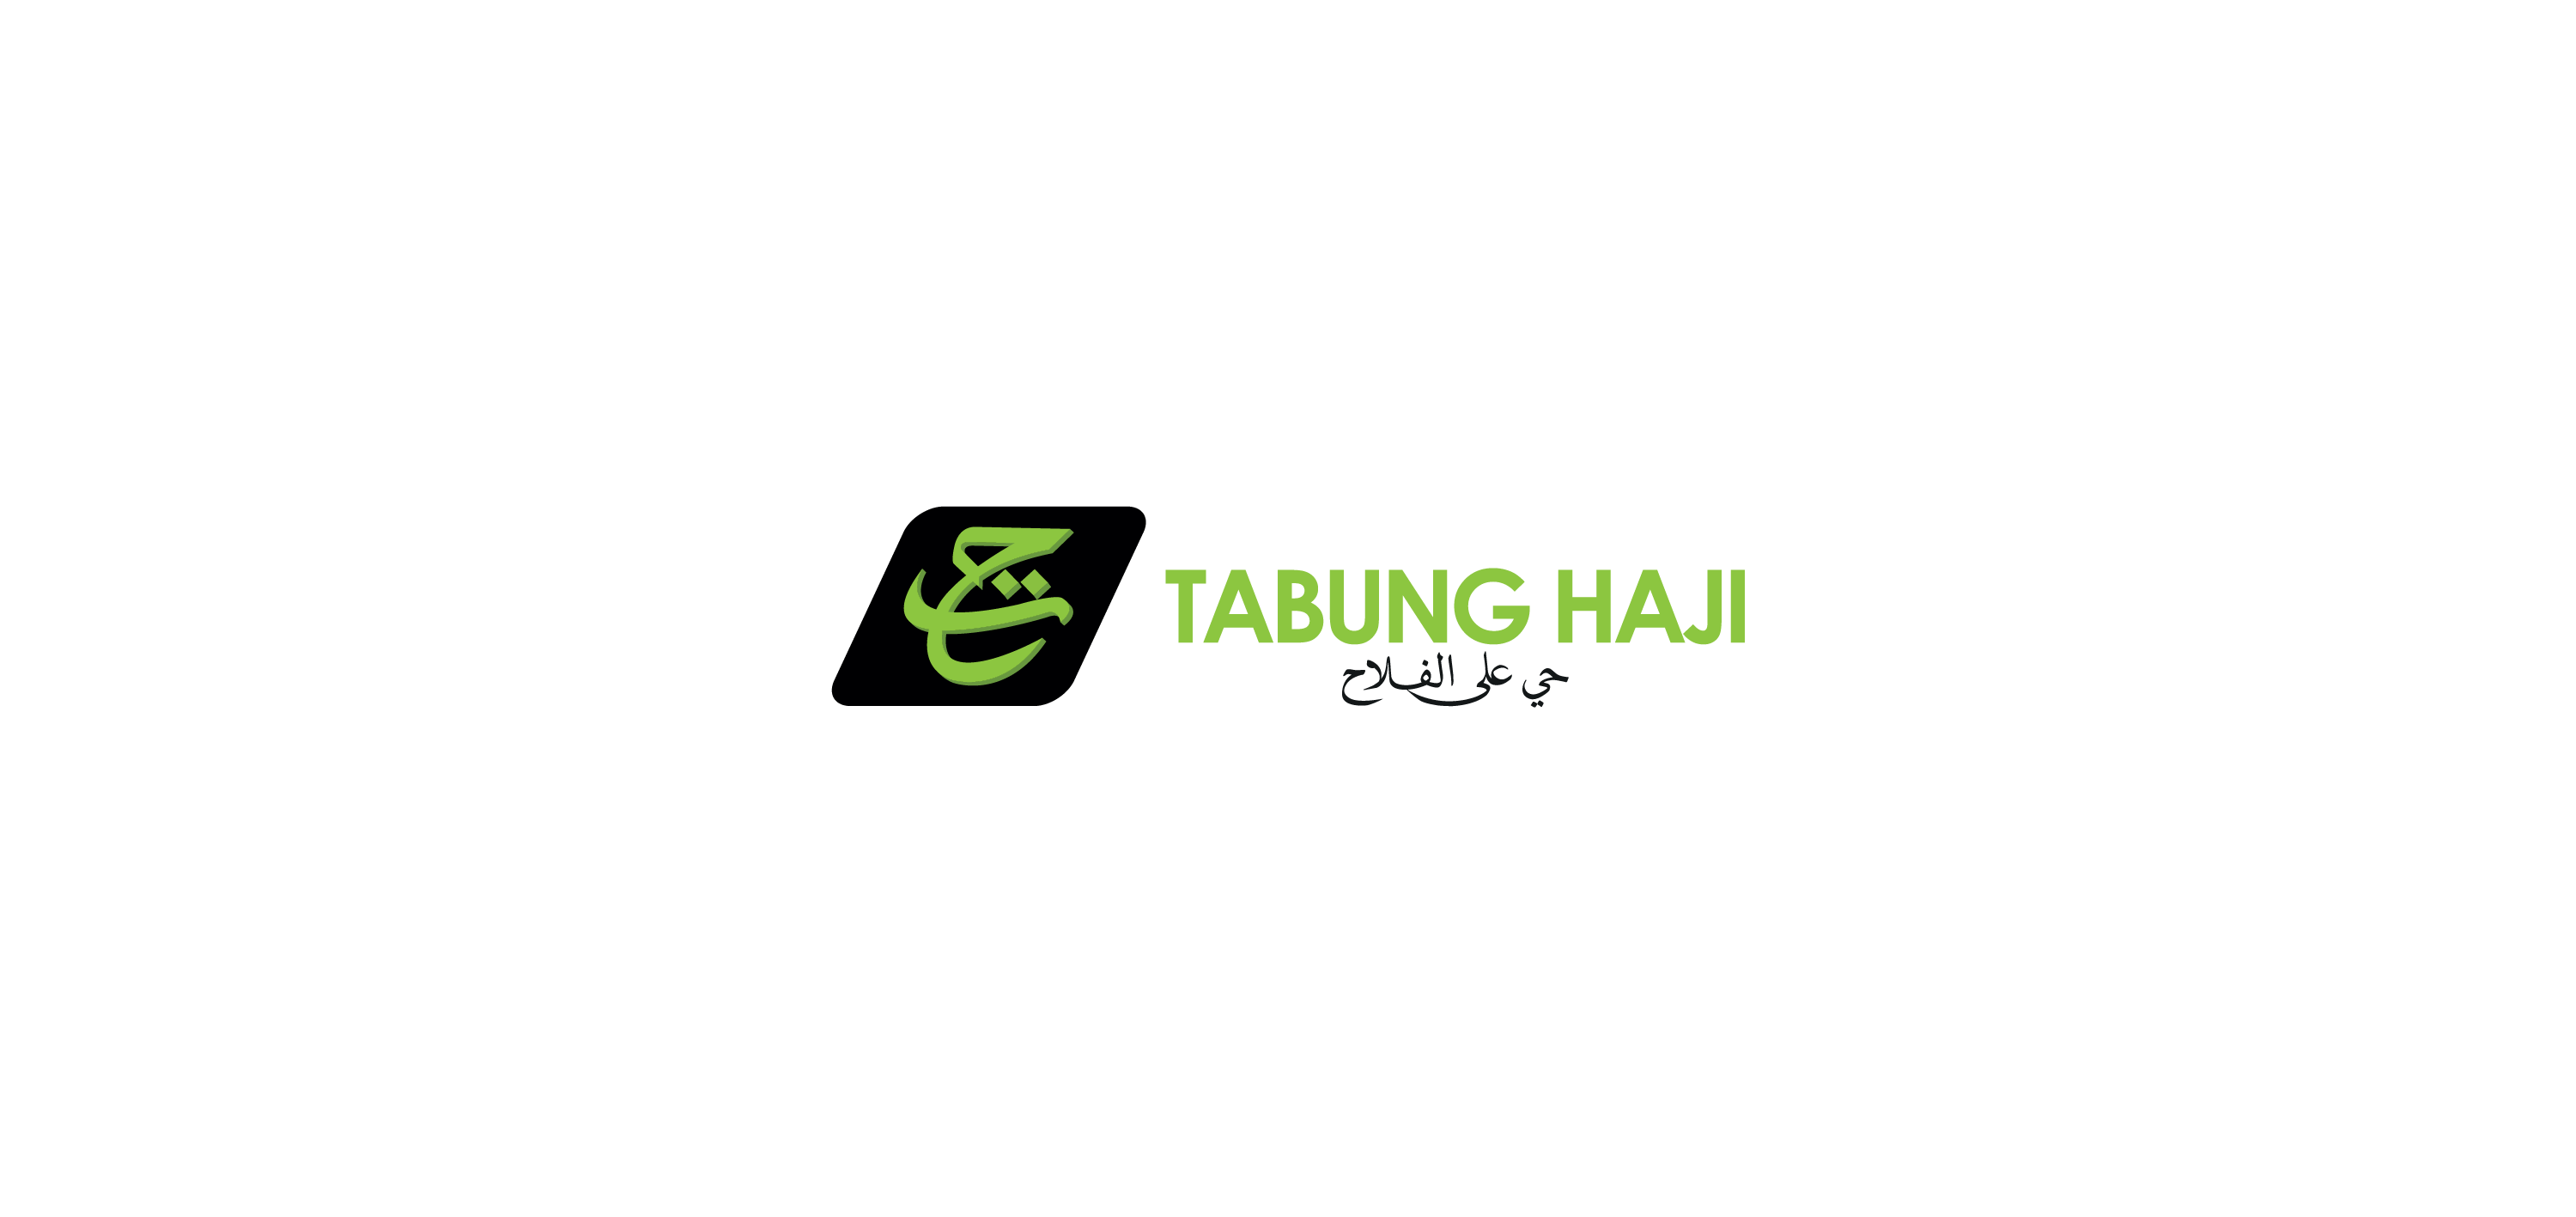 Tabung Haji logo vector